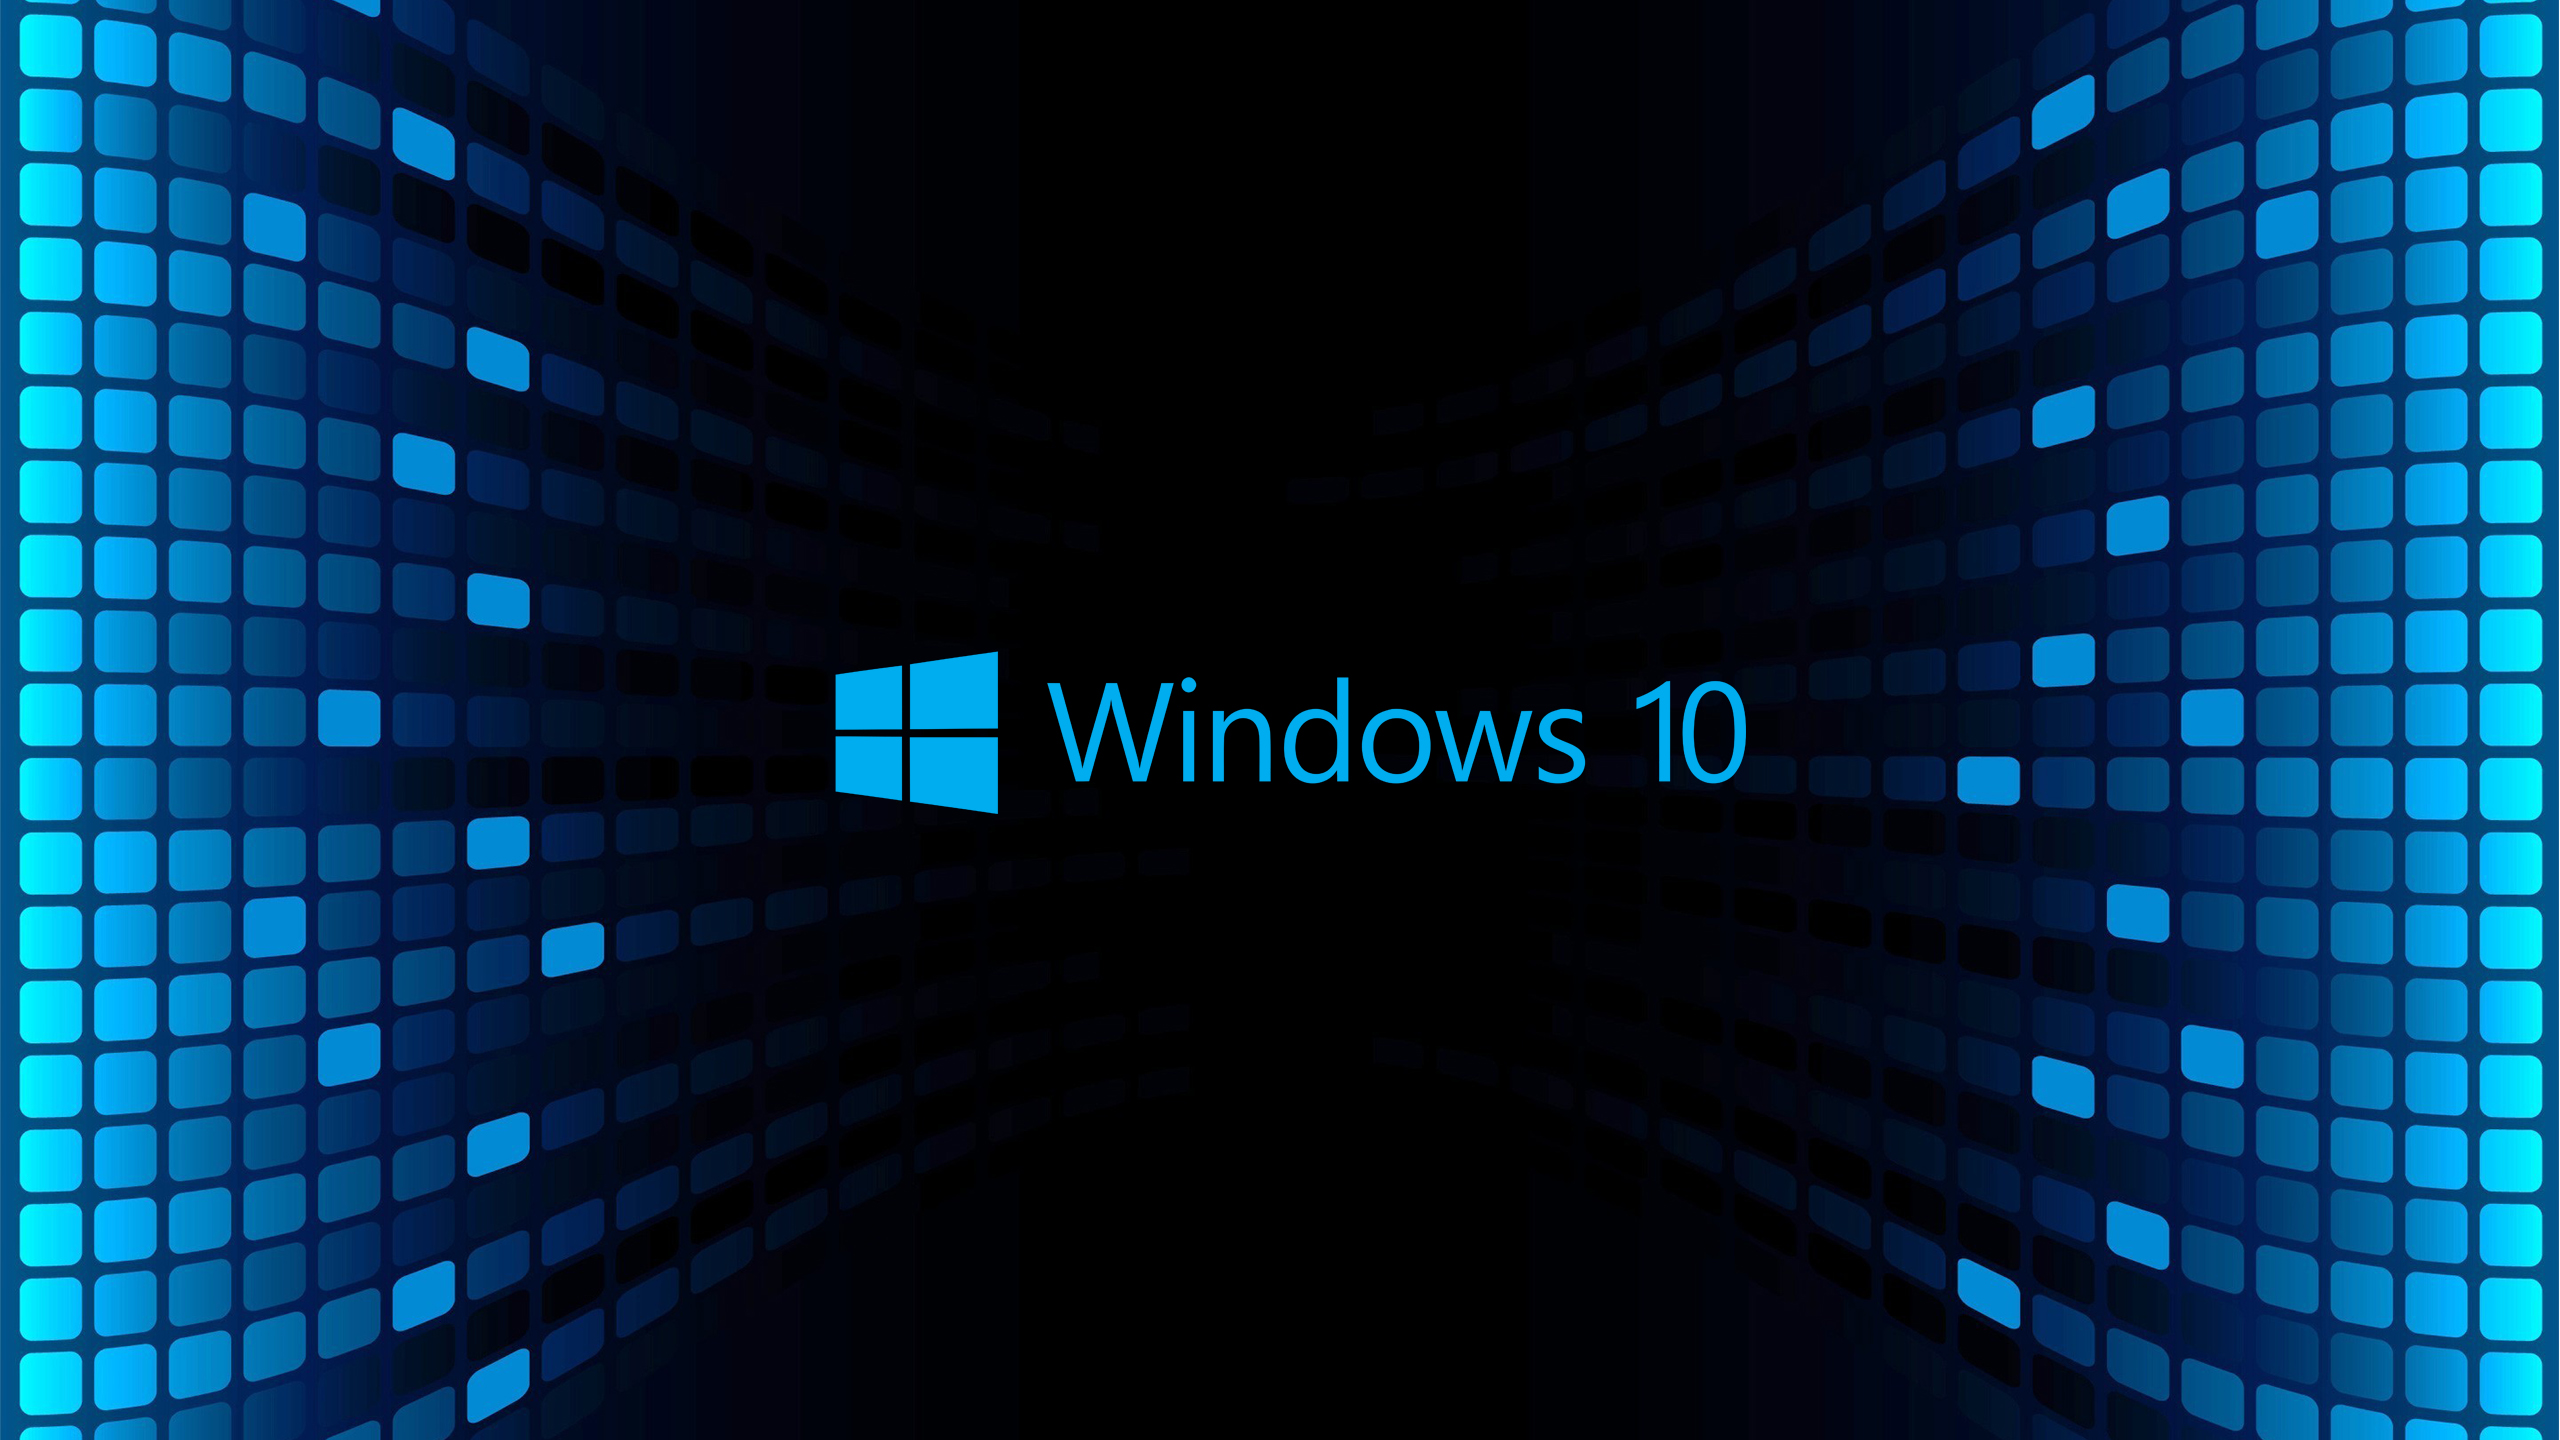 HD Windows 10 Wallpaper in 3D for Black Desktop Background